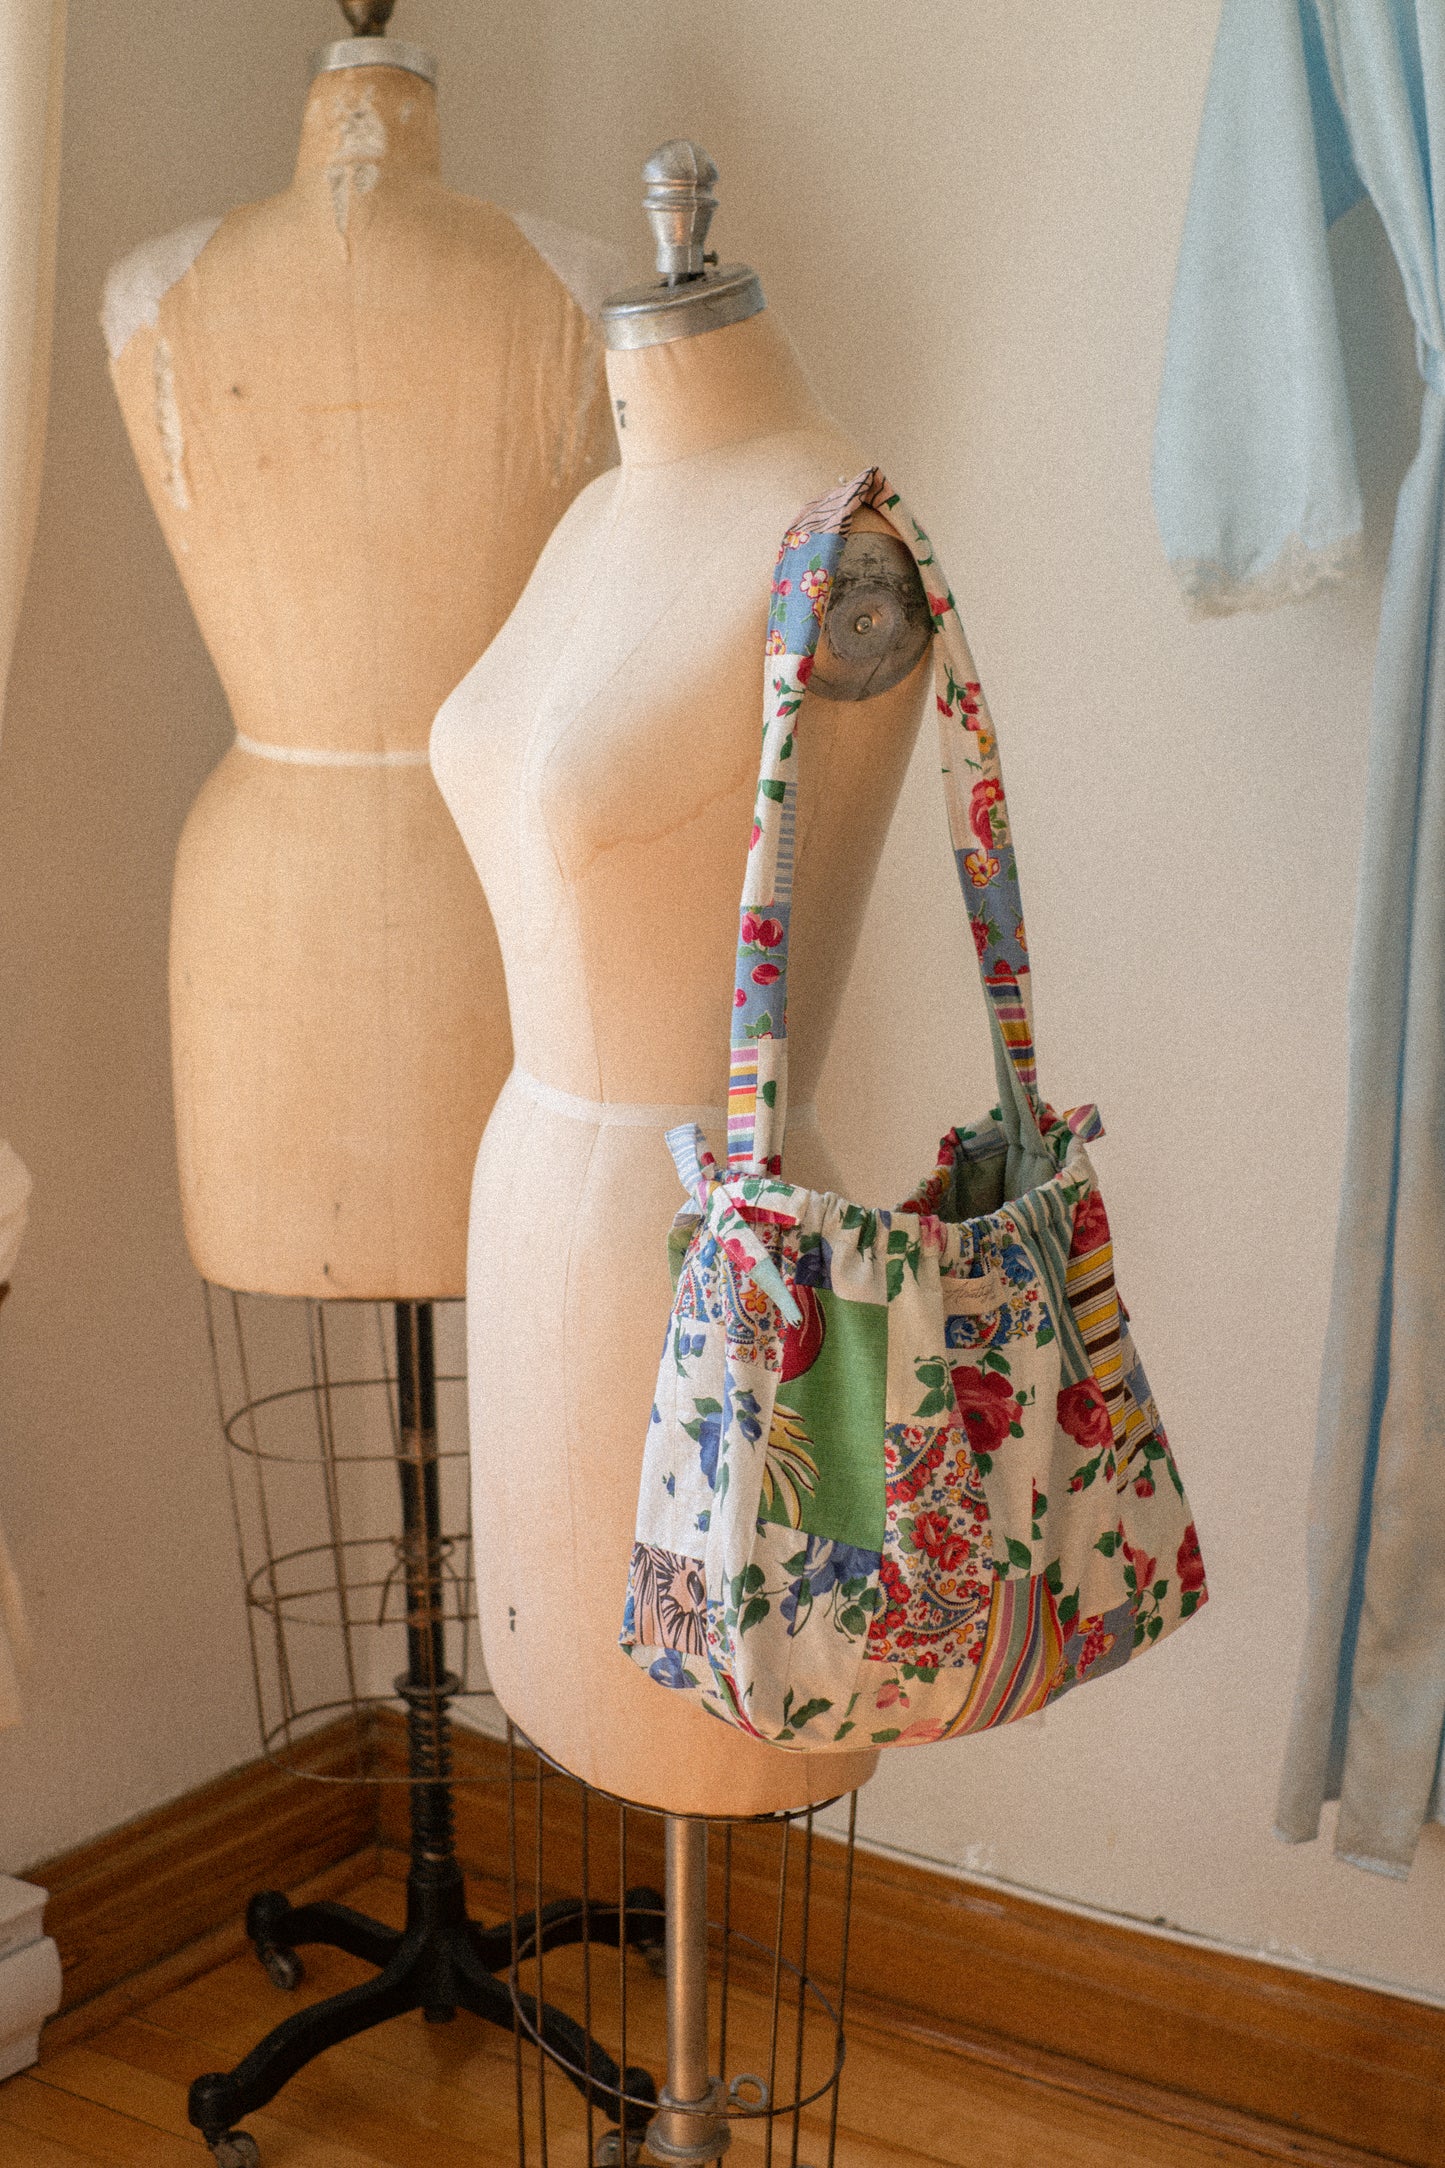 New! Handmade patchwork cotton tote bag - Printemps